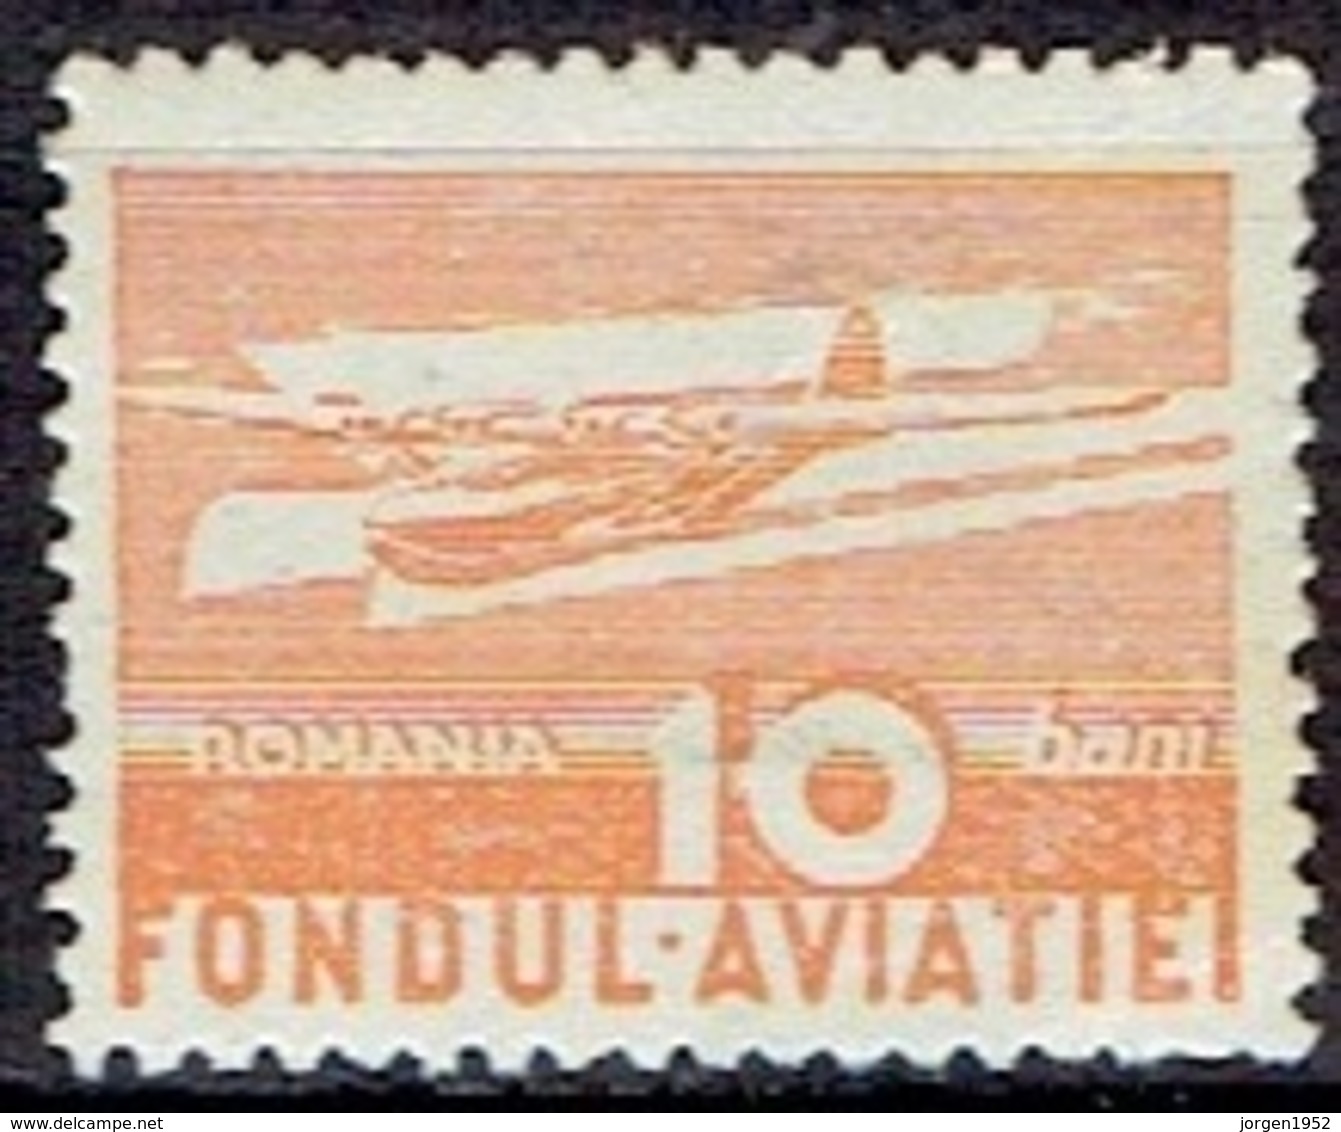 ROMANIA # FROM 1949 * - Dienstmarken